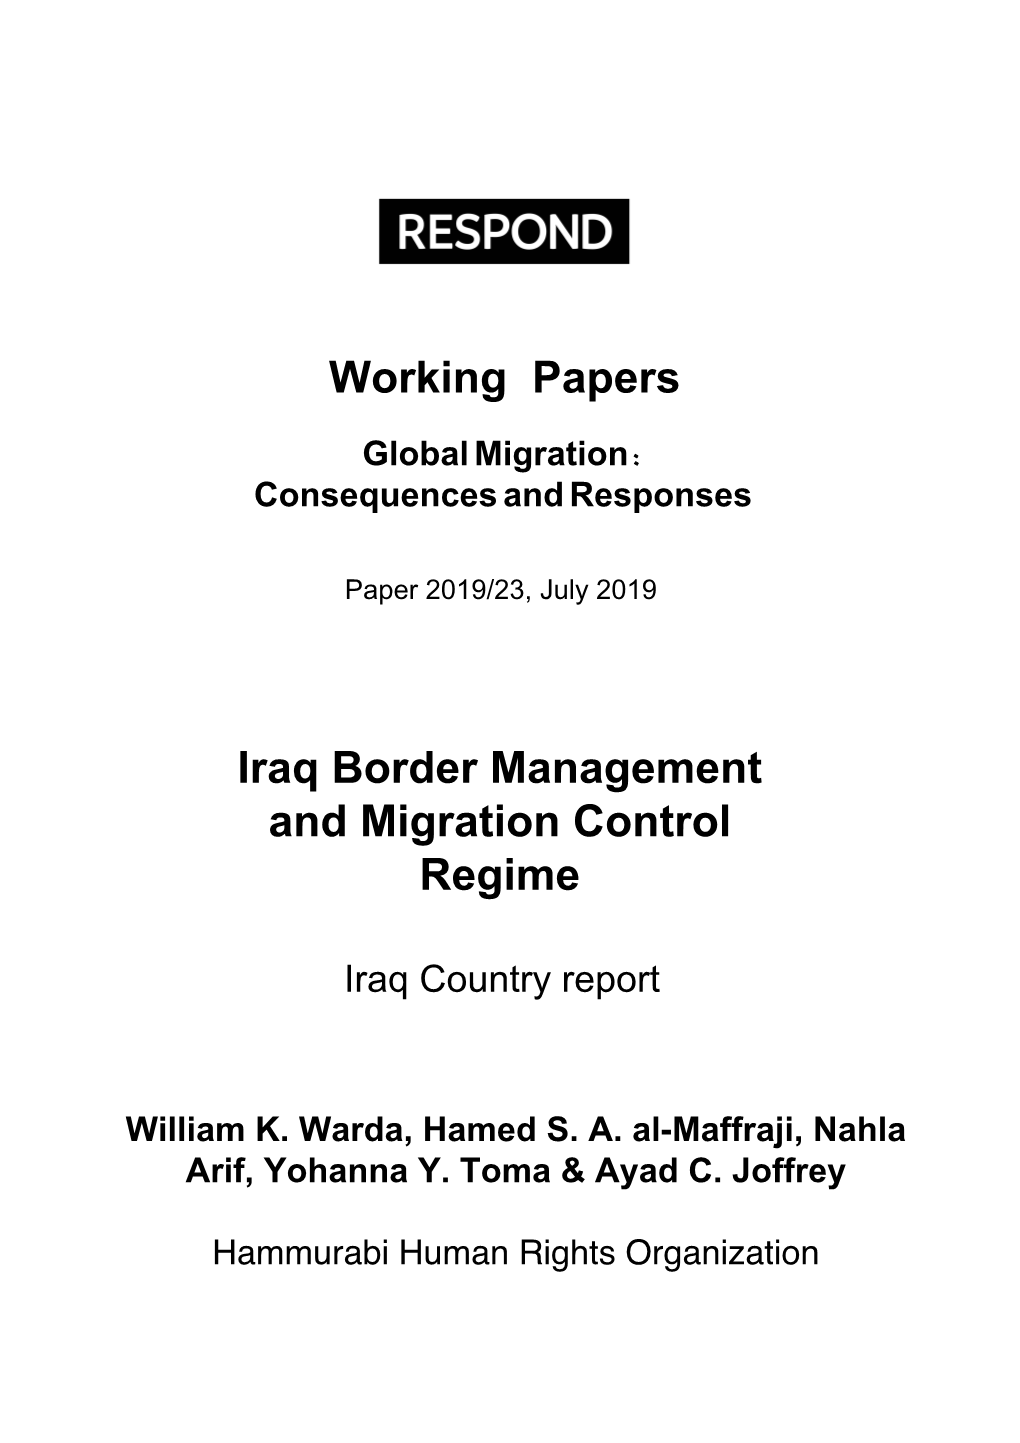 Iraq Border Management and Migration Control Regime Working